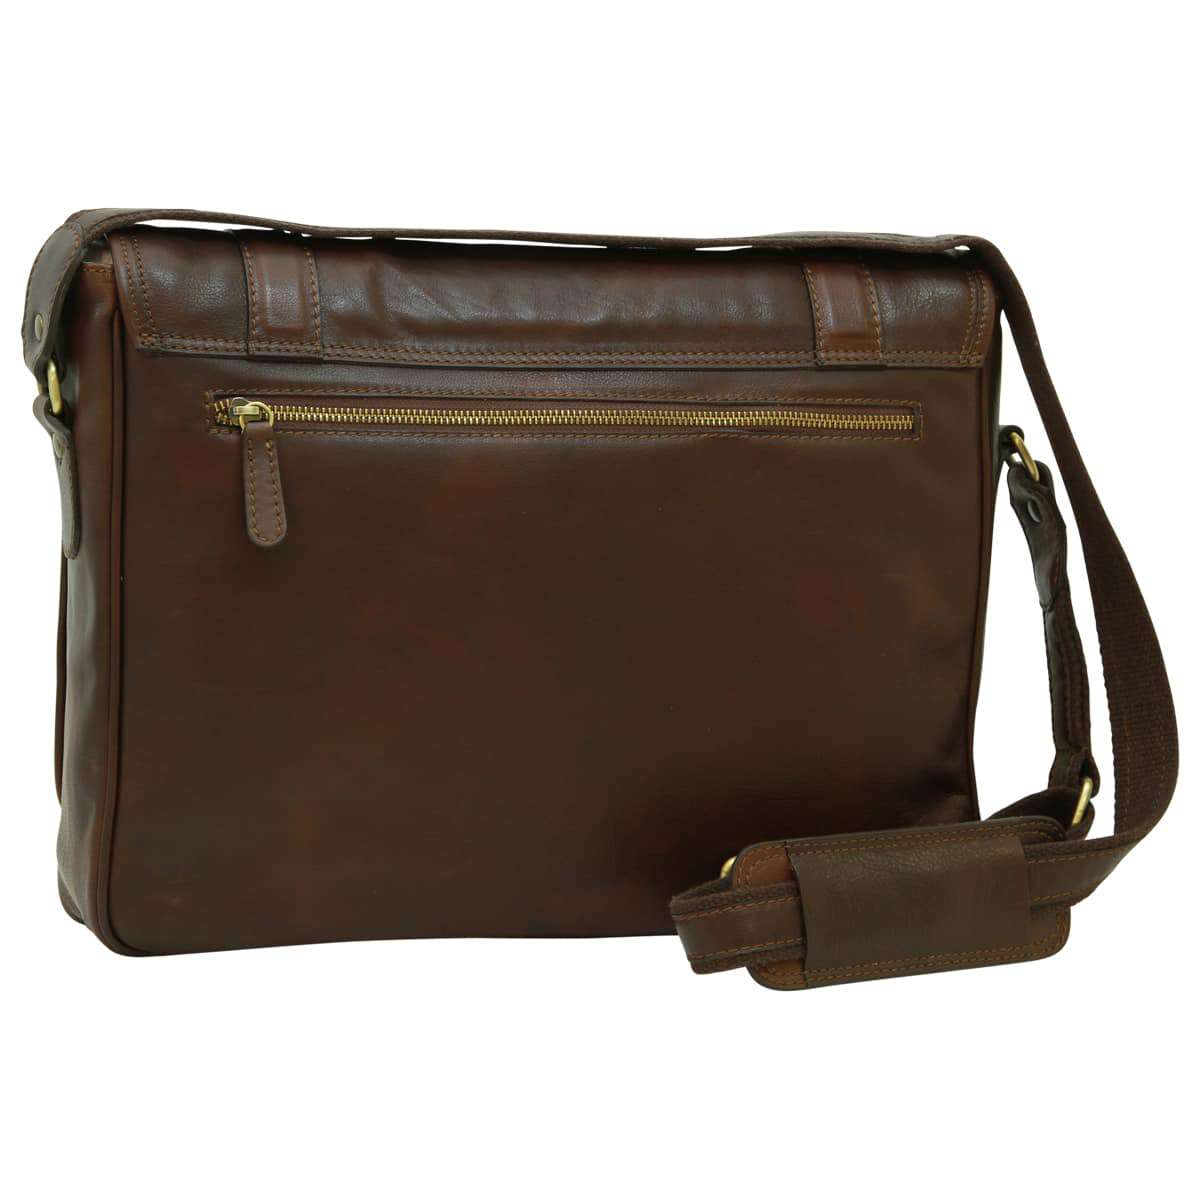 Soft Calfskin Leather Messenger Bag - Dark Brown | 030491TM | EURO | Old Angler Firenze